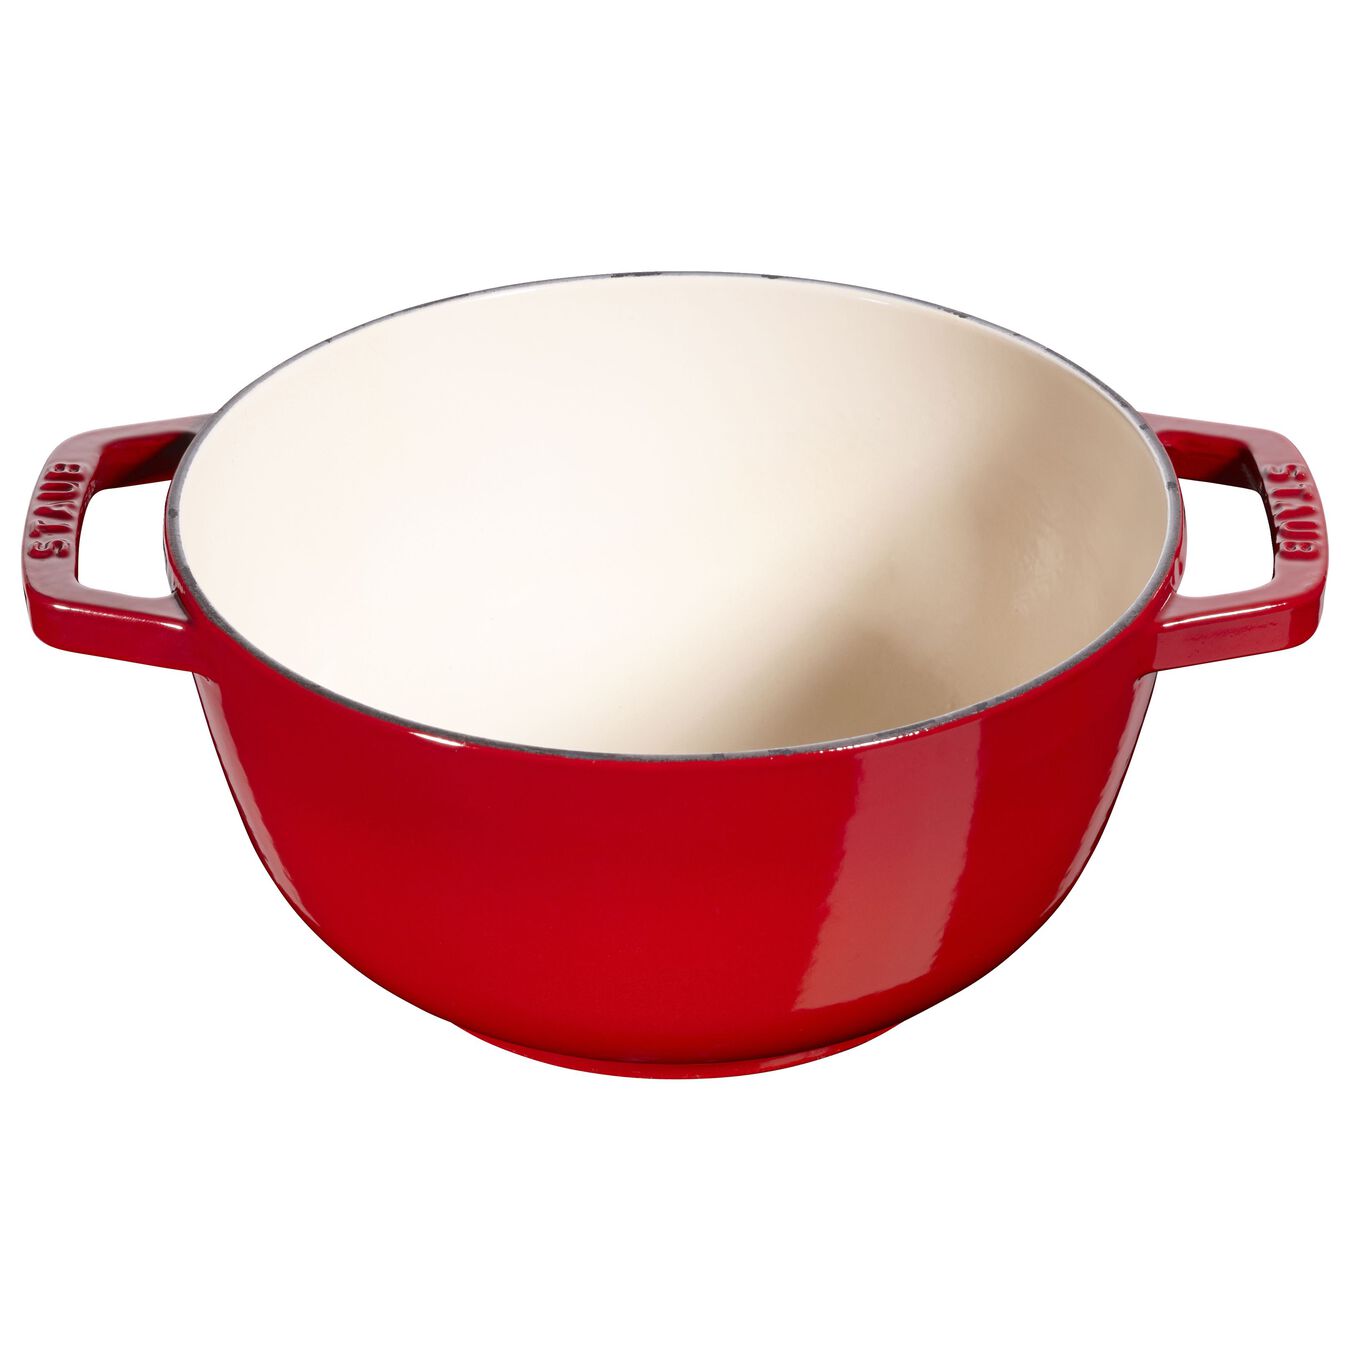 Juego de fondue 20 cm, Cereza,,large 2